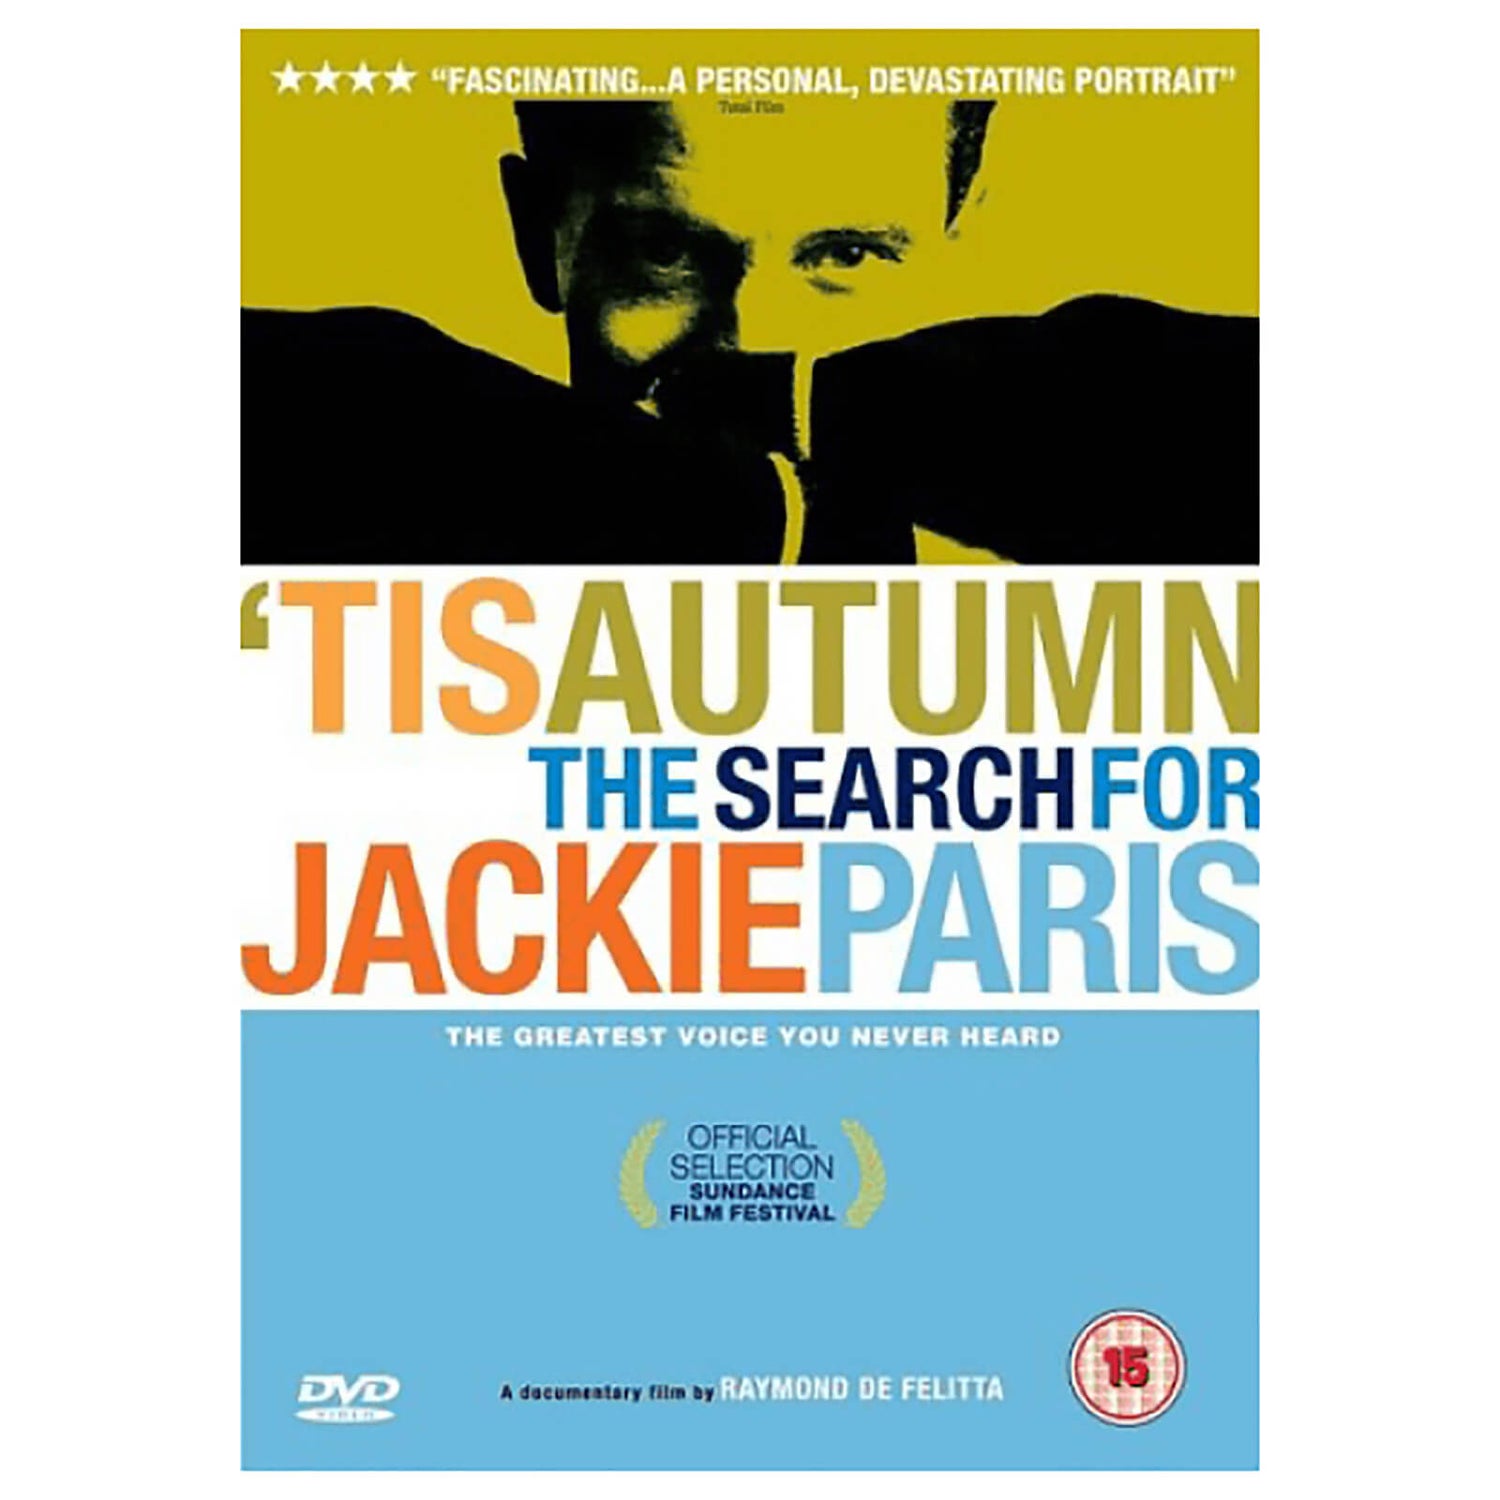 Tis Autumn - Search For Jackie Paris